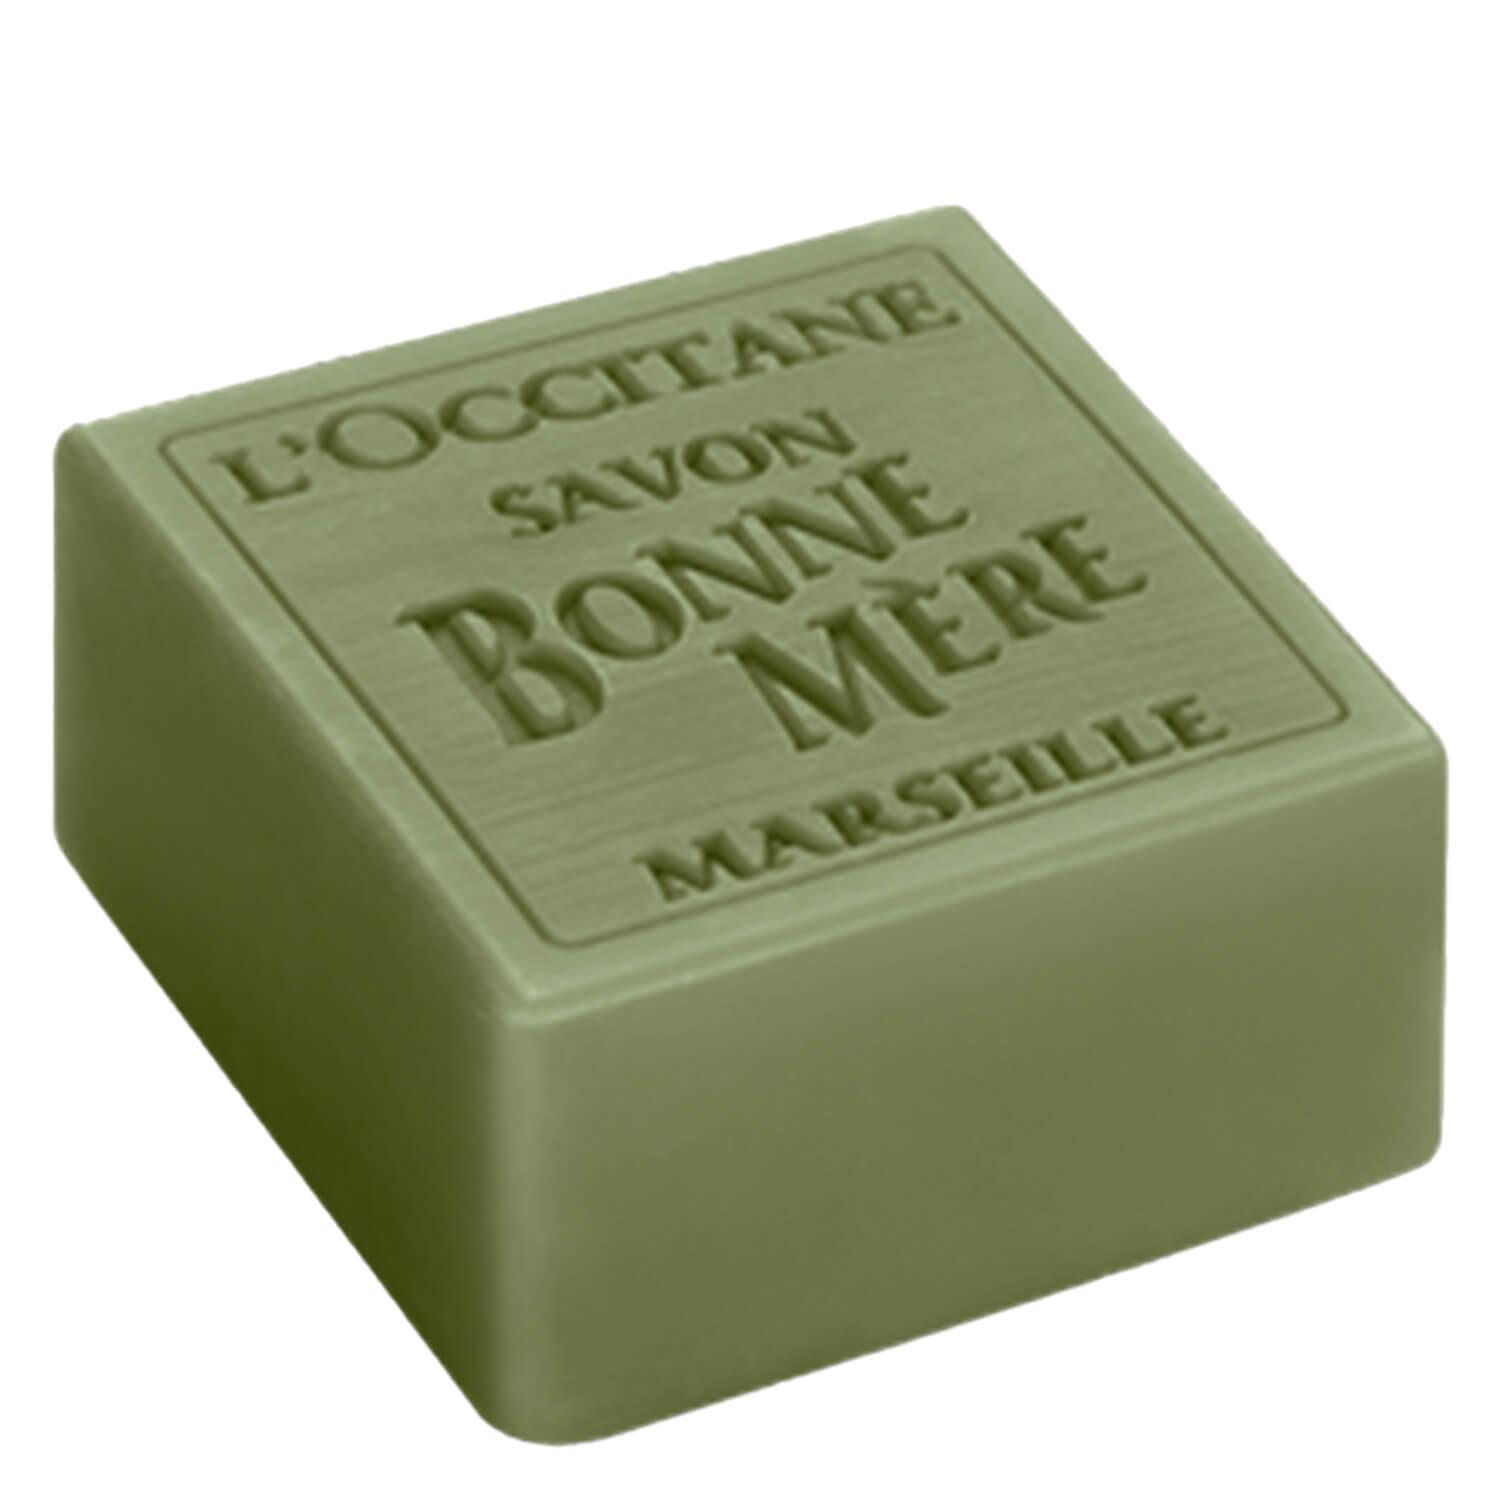 L'Occitane Hand - BM Rosemary & Sage Soap